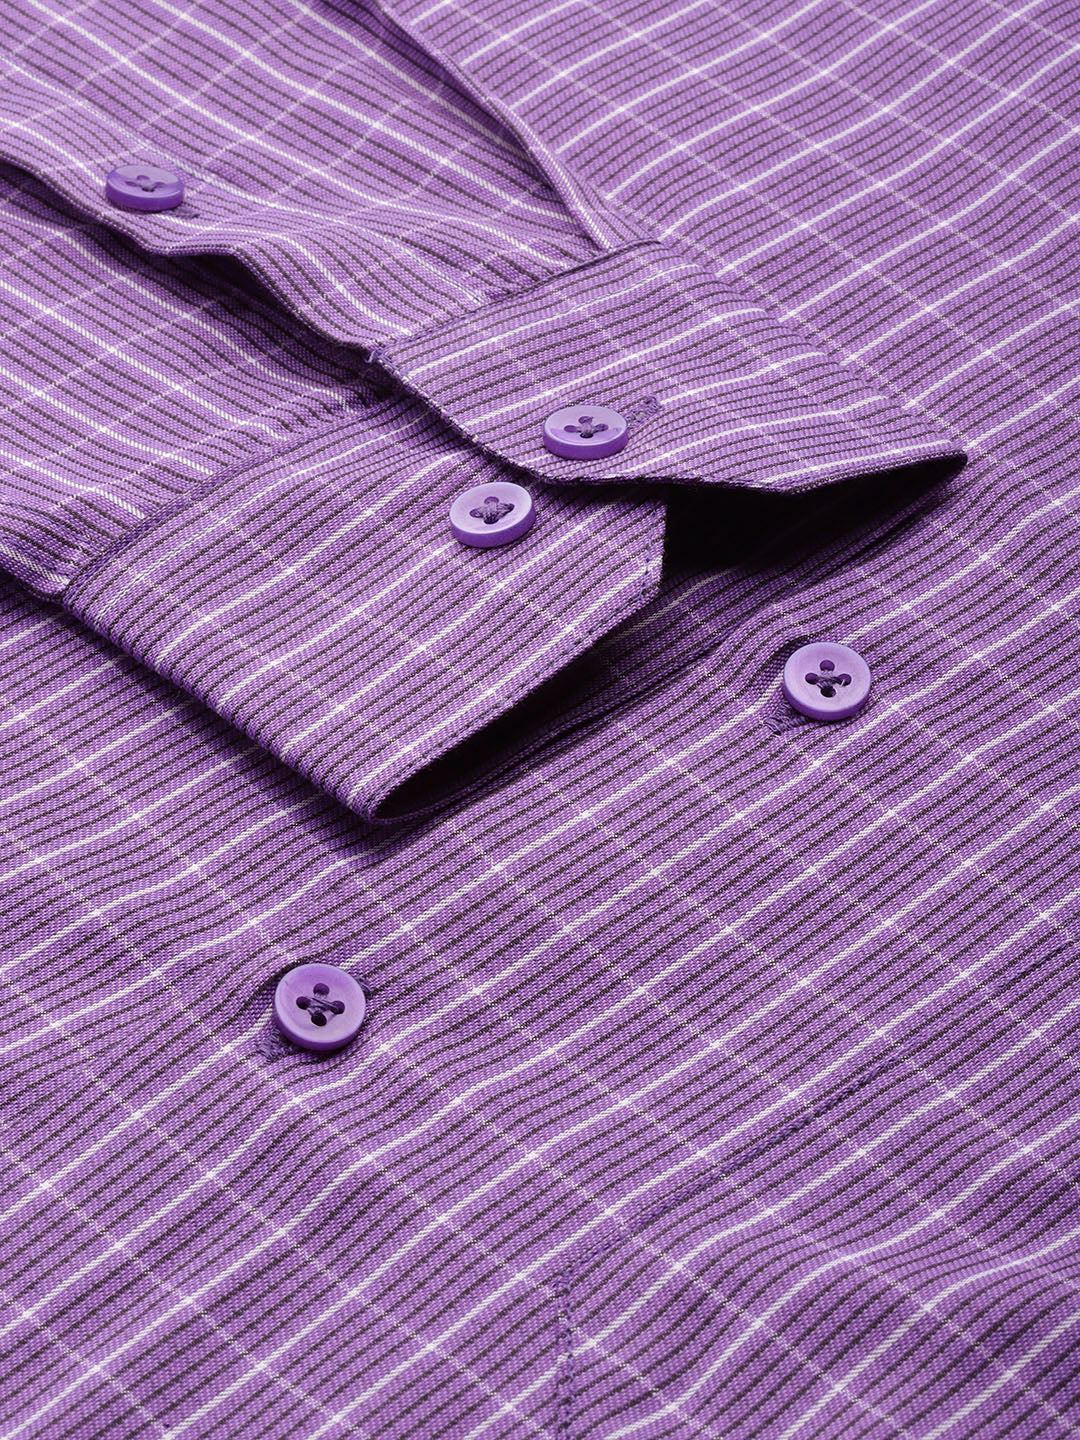 Men's Cotton Checked Formal Shirts ( SF 800Voilet ) - Jainish